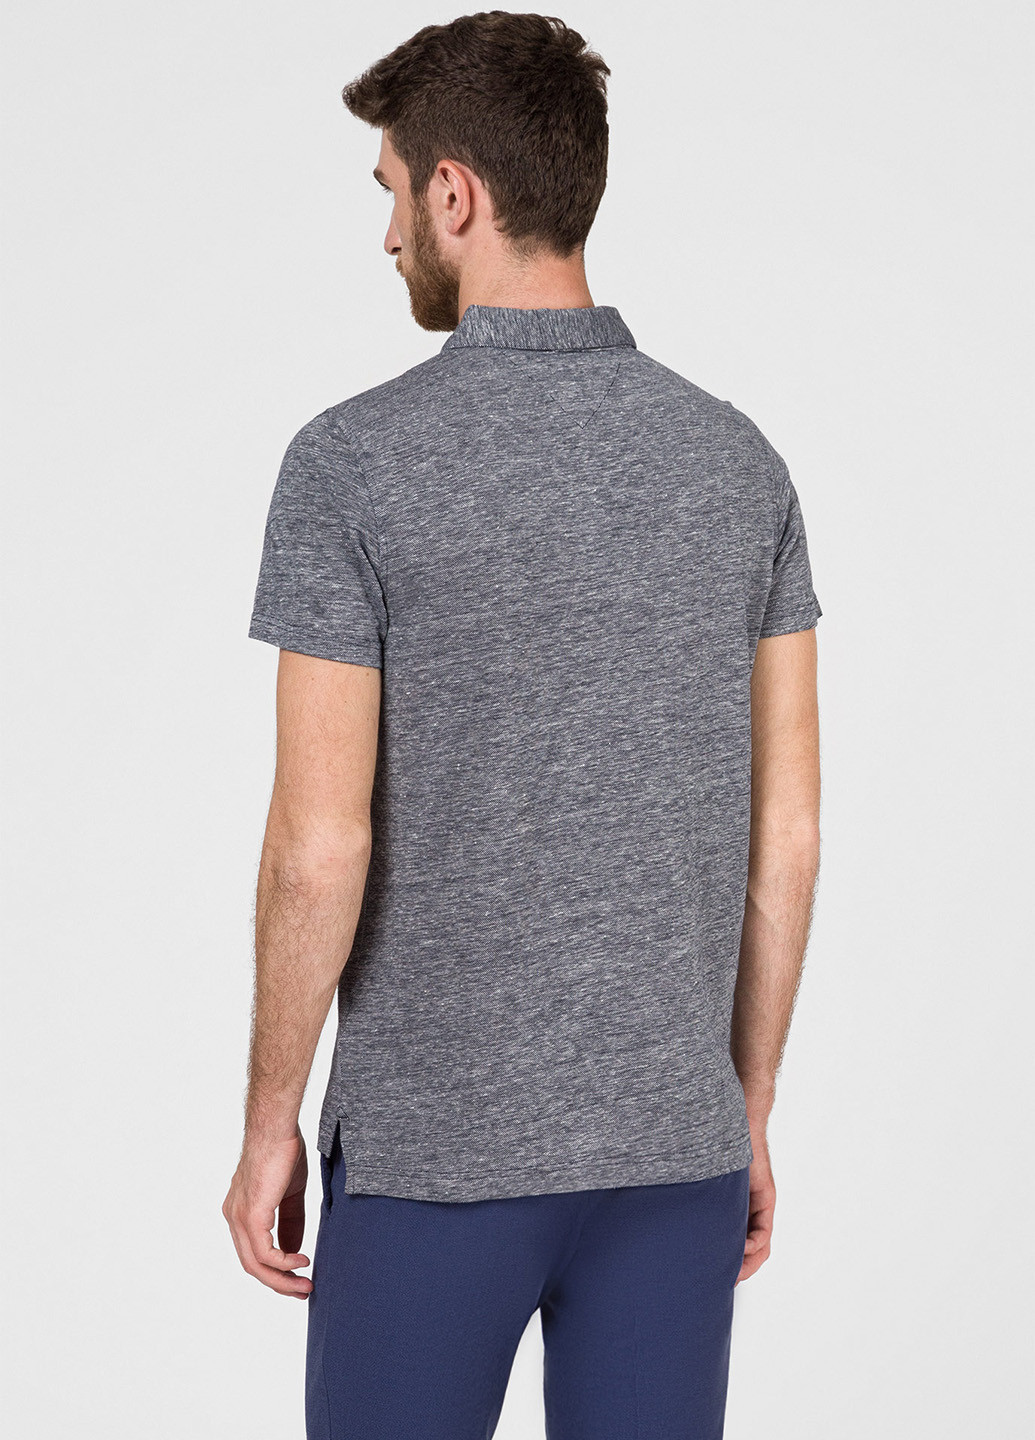 Серая футболка-поло для мужчин Tommy Hilfiger меланжевая